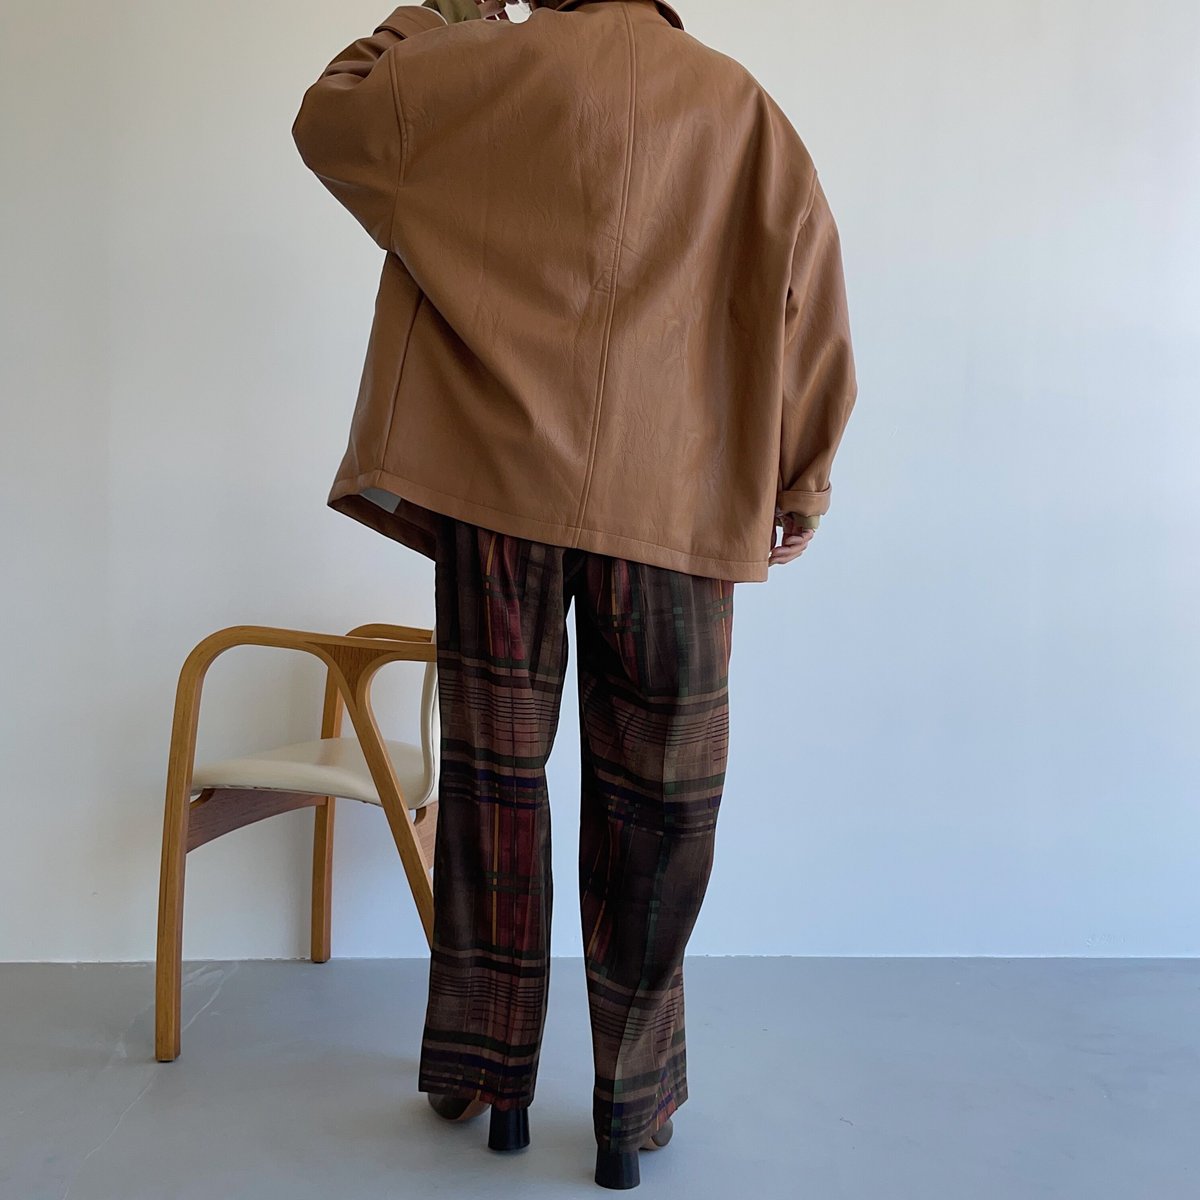 【nokcha original】eco leather over jacket/camel brown_no0163